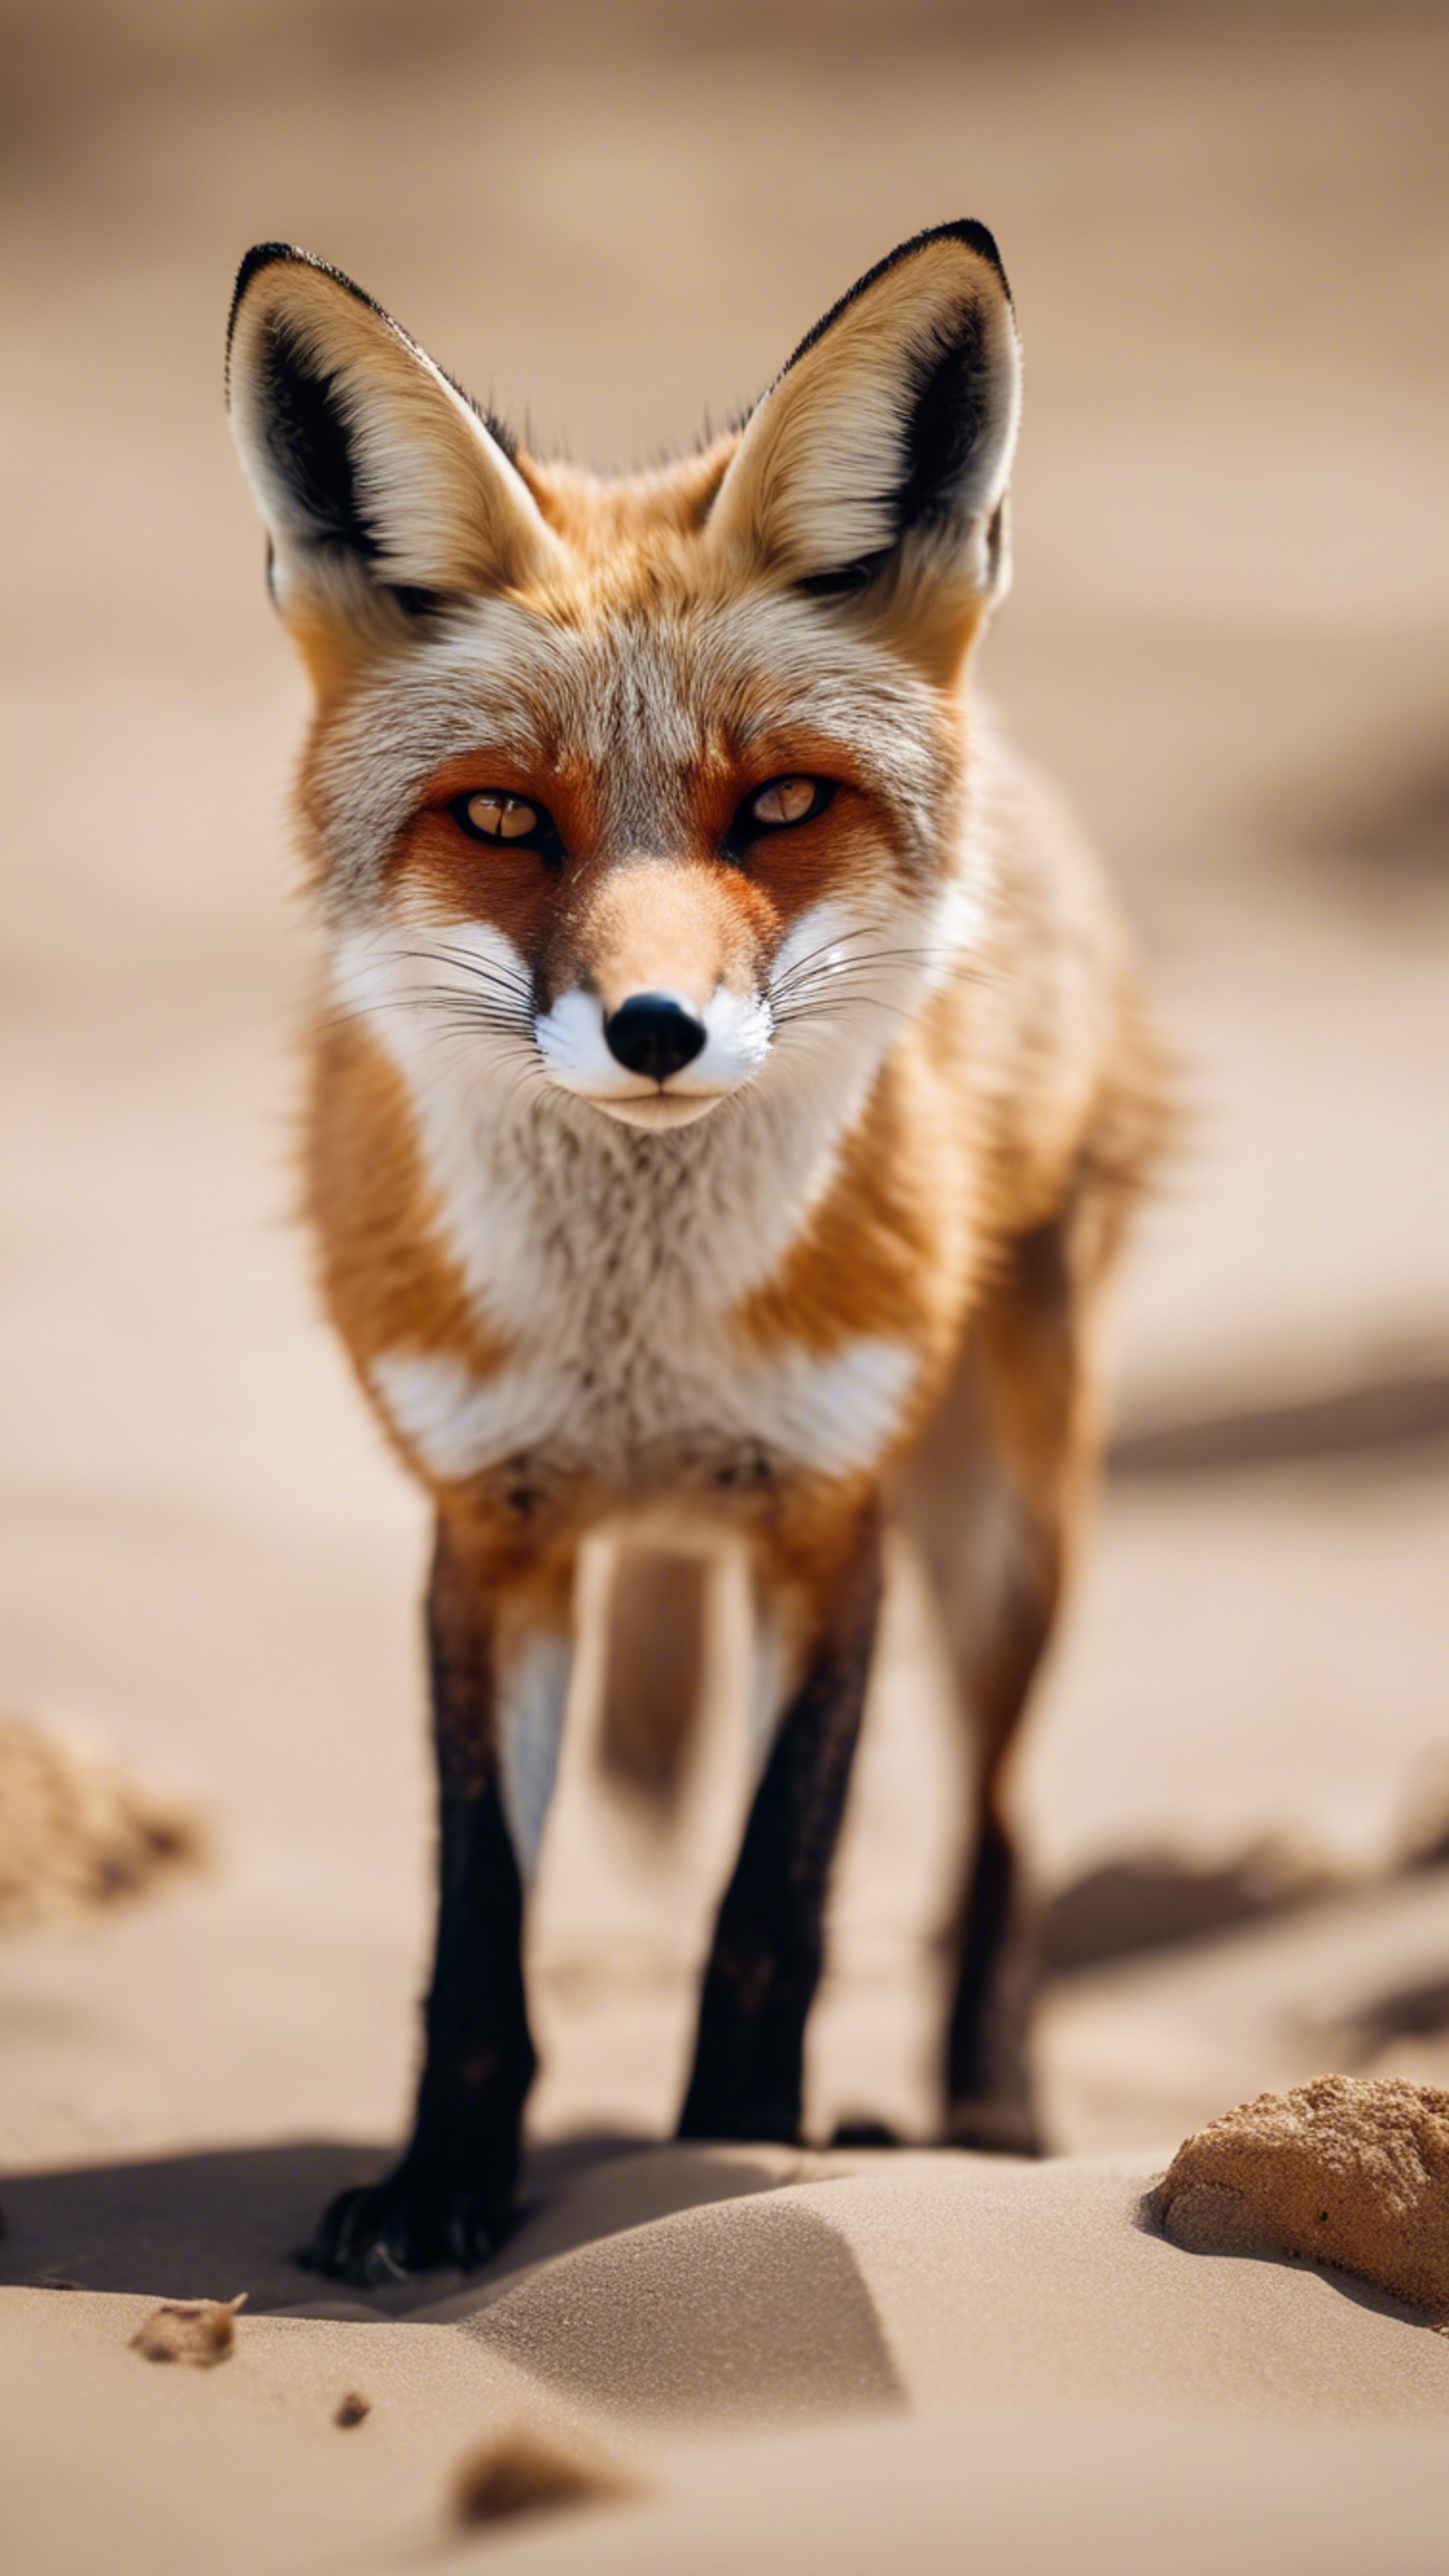 A lone desert fox in its natural habitat, roaming around amid the sand dunes. 벽지[17bb71b2b2bc40f18dca]